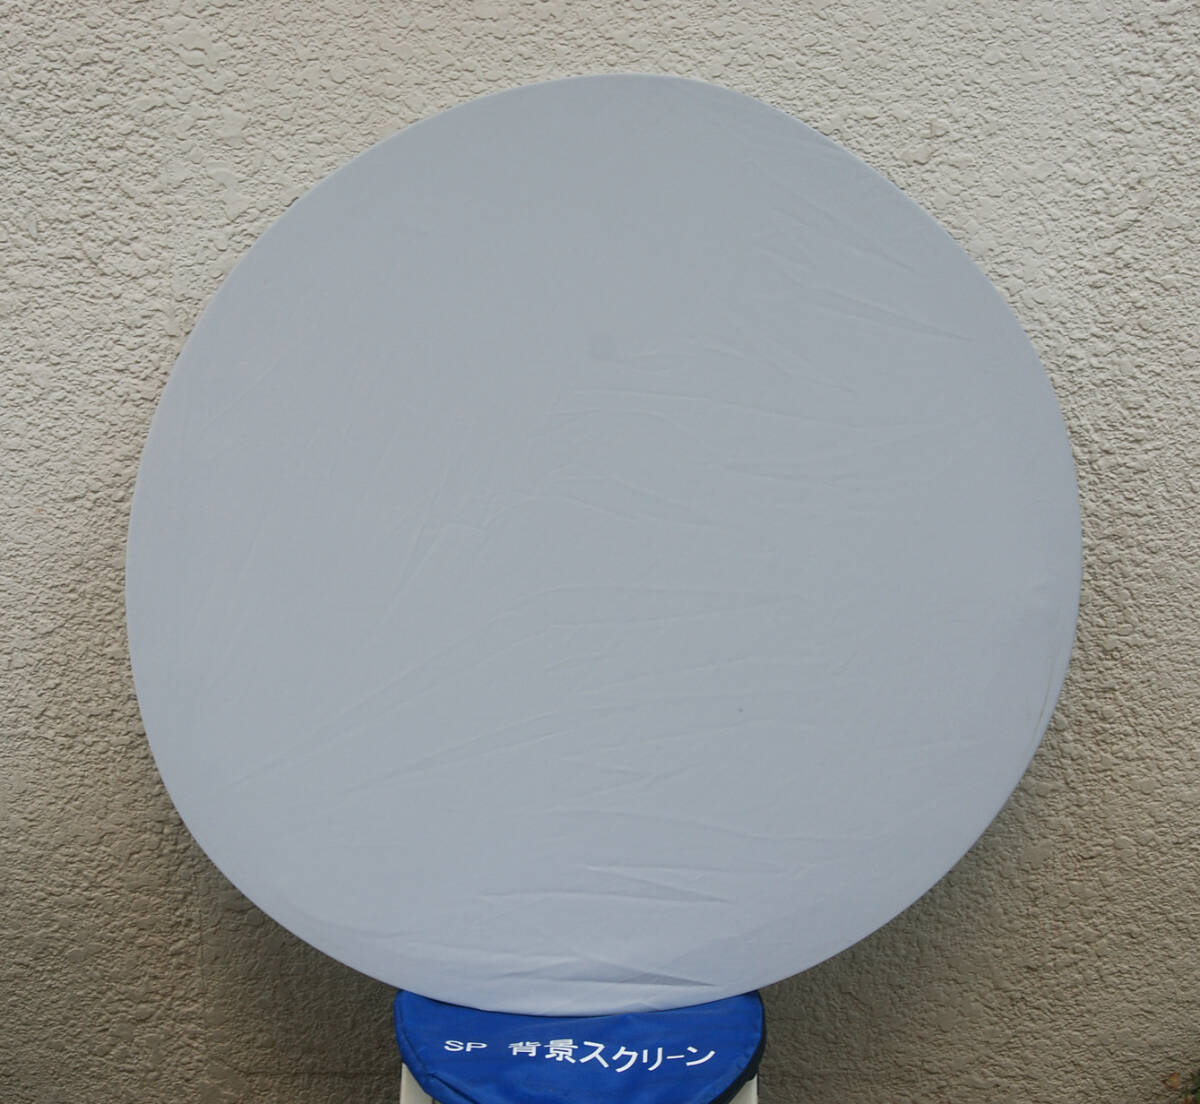 SP фон экран ( круглый зеркальный )85cm диаметр 